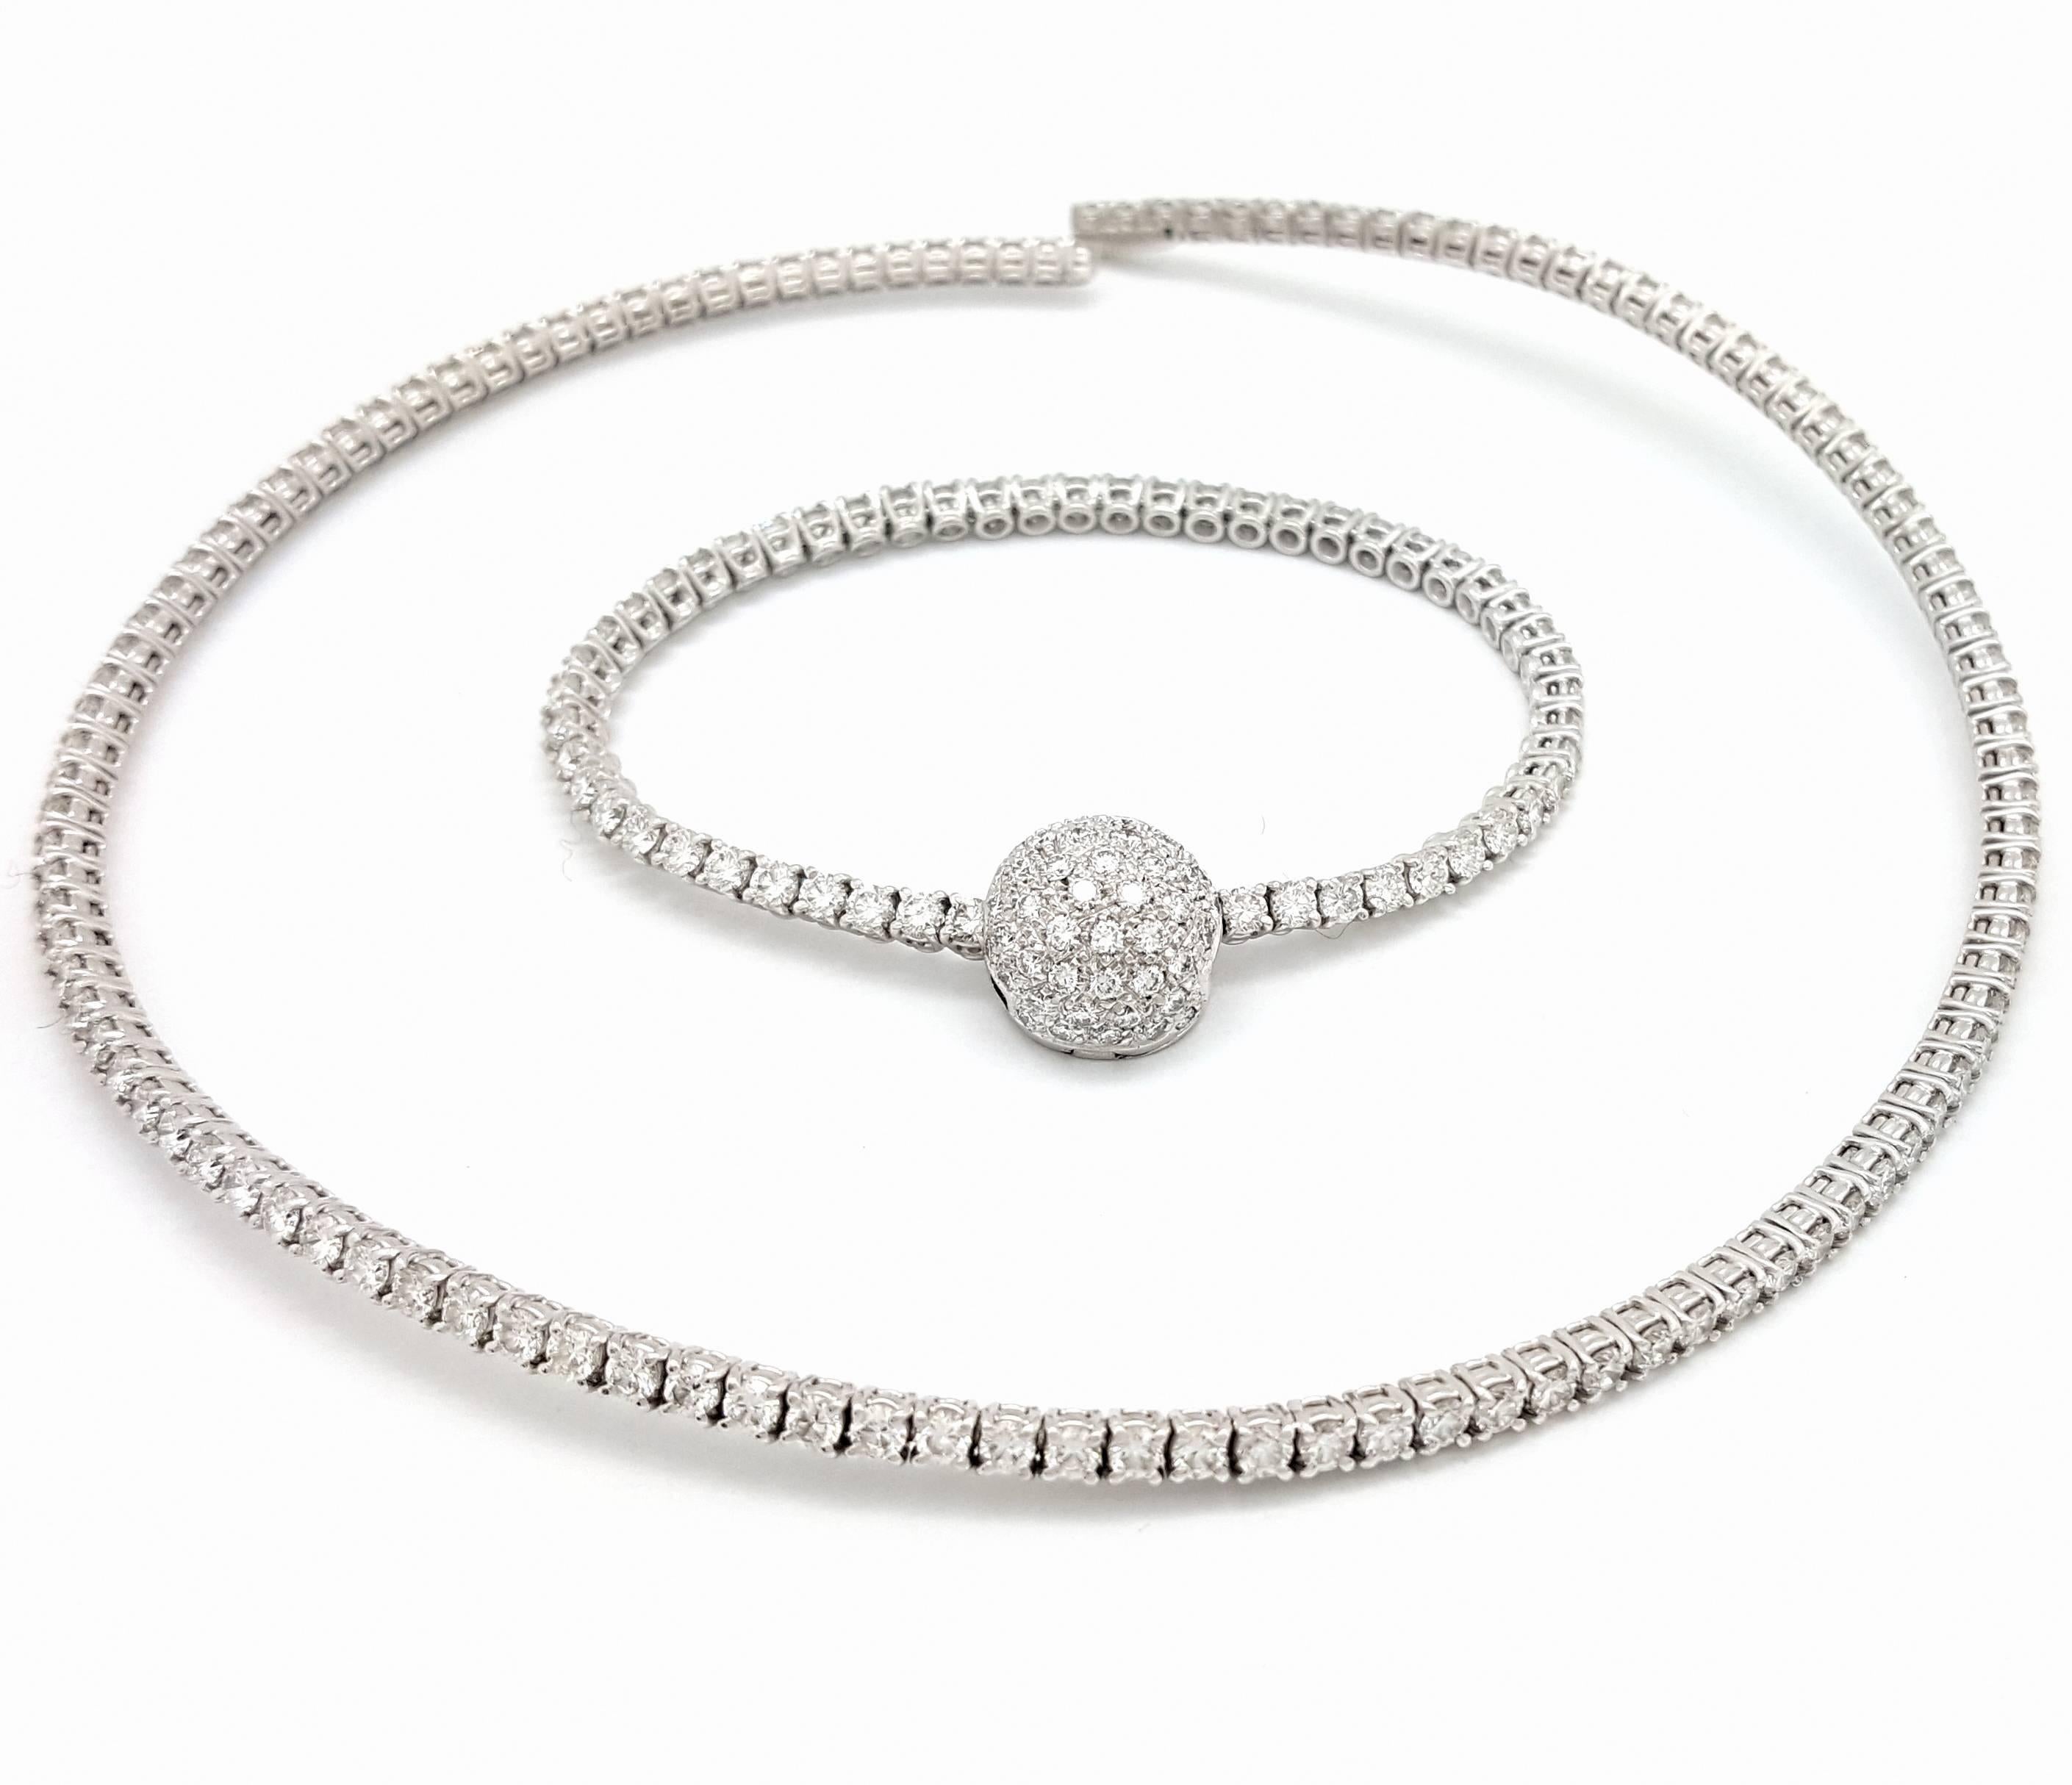 Contemporary Stefan Hafner 11.93 Carats Diamonds Gold Collar Necklace Bracelet For Sale